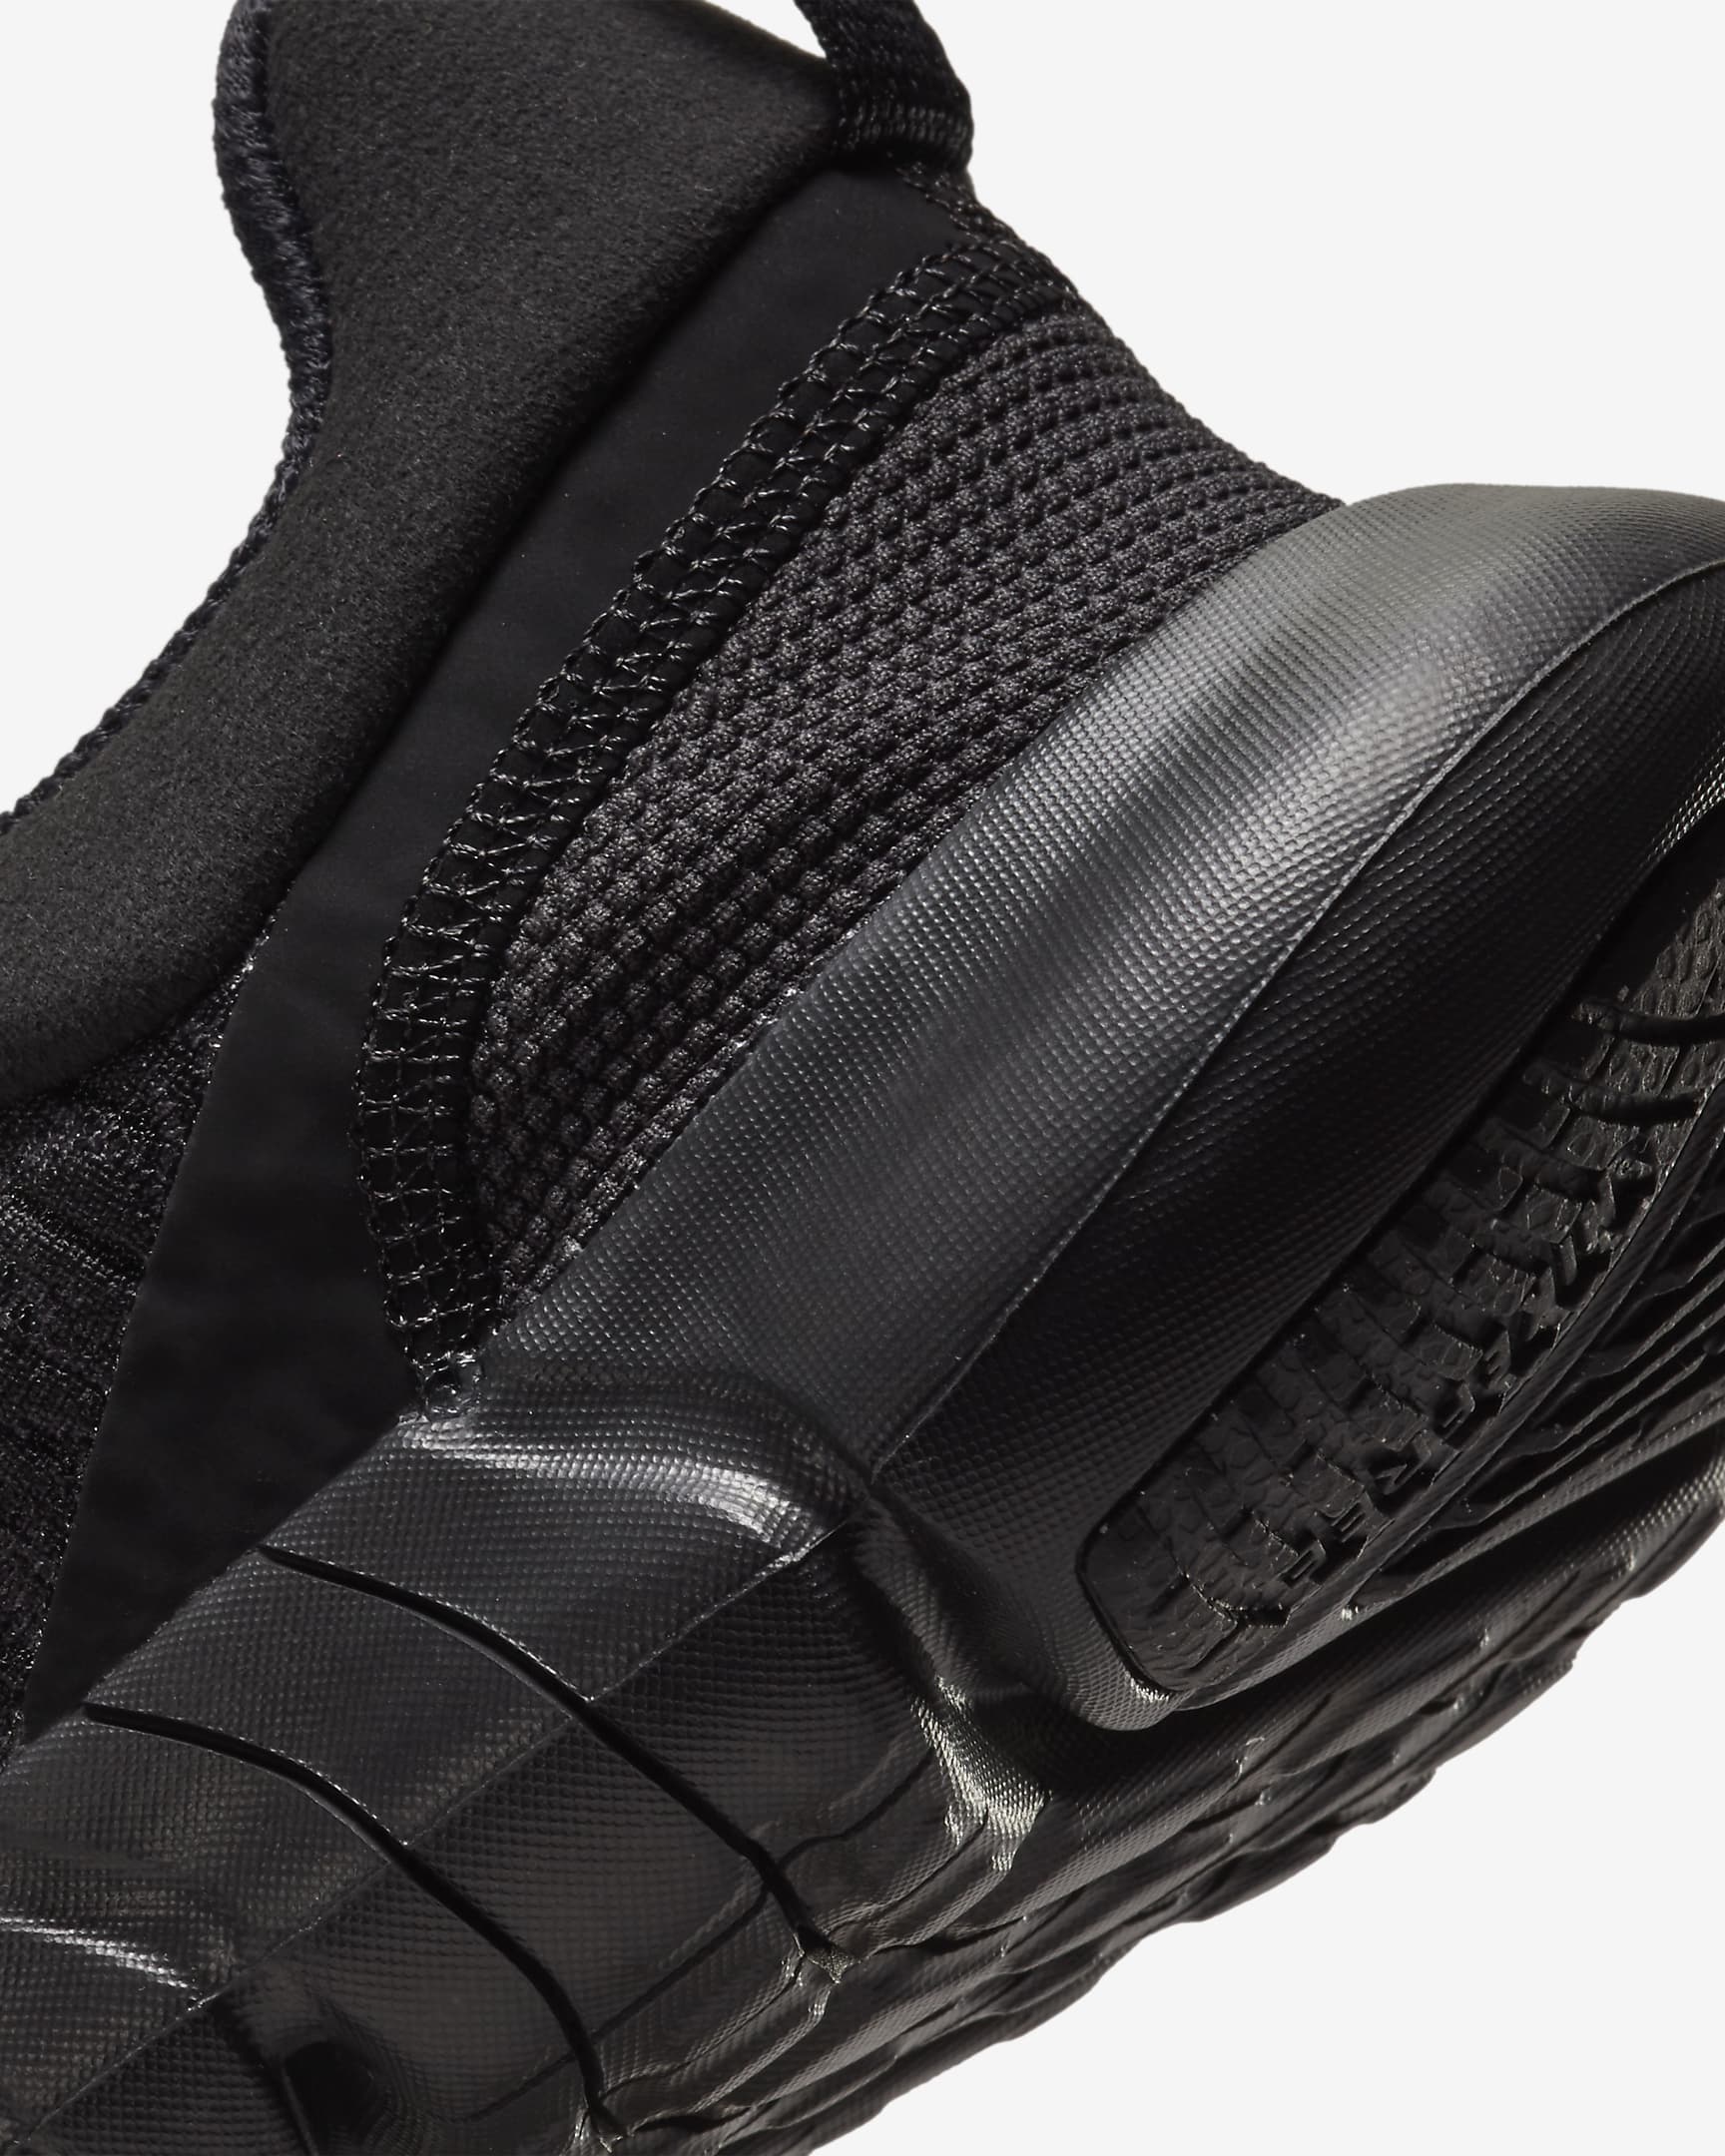 Nike Free Run 5.0 Men's Road Running Shoes - Black/Off Noir/Black